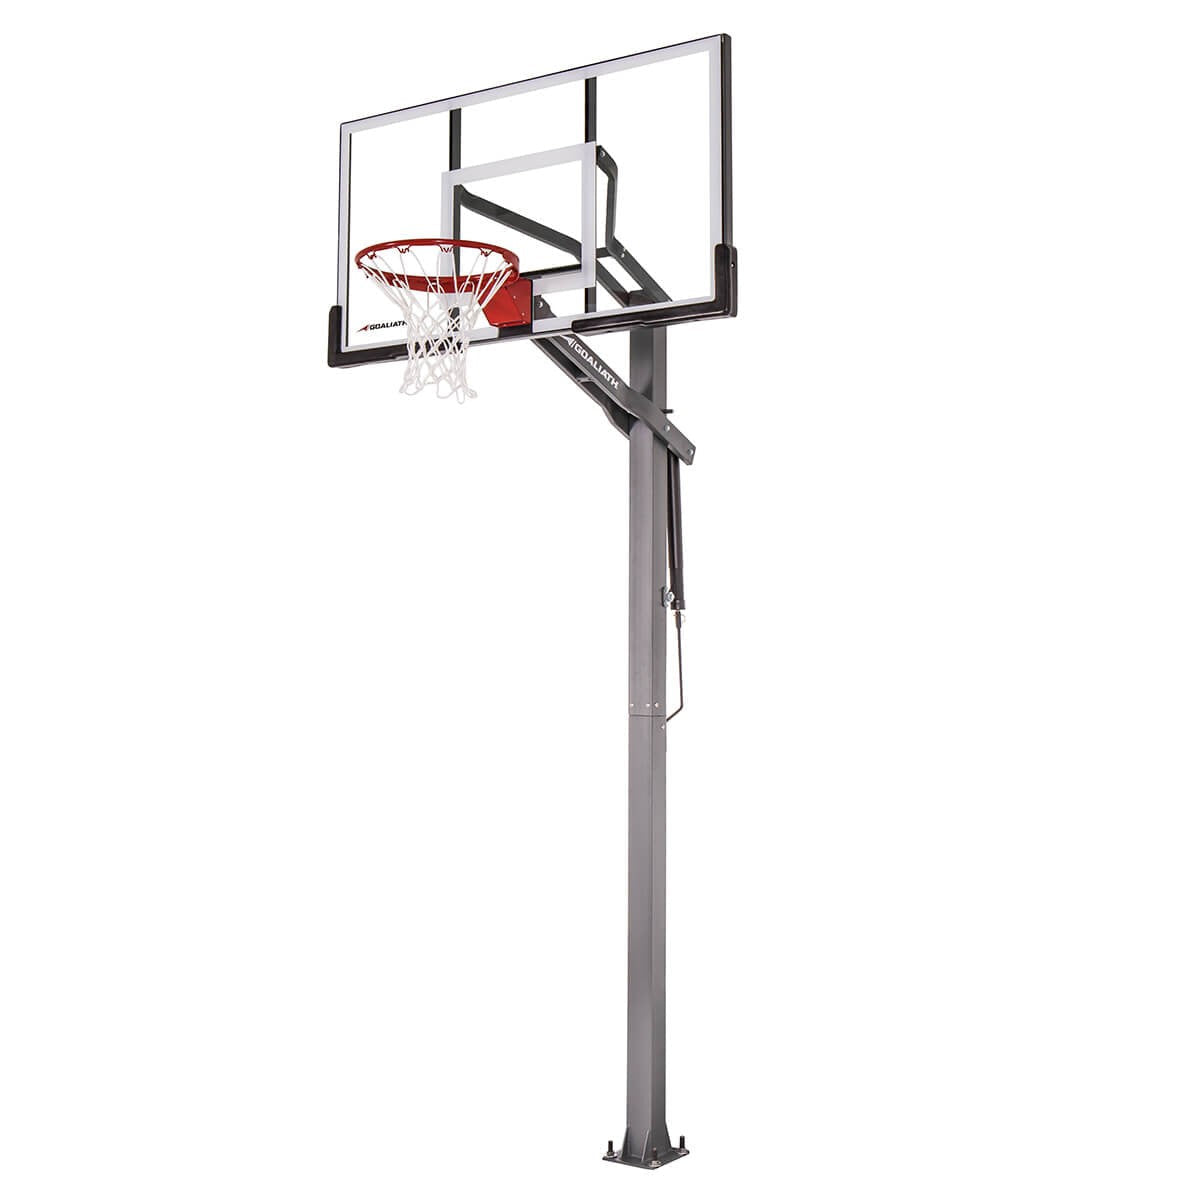 Goaliath GB60 In-Ground Basketball Hoop System